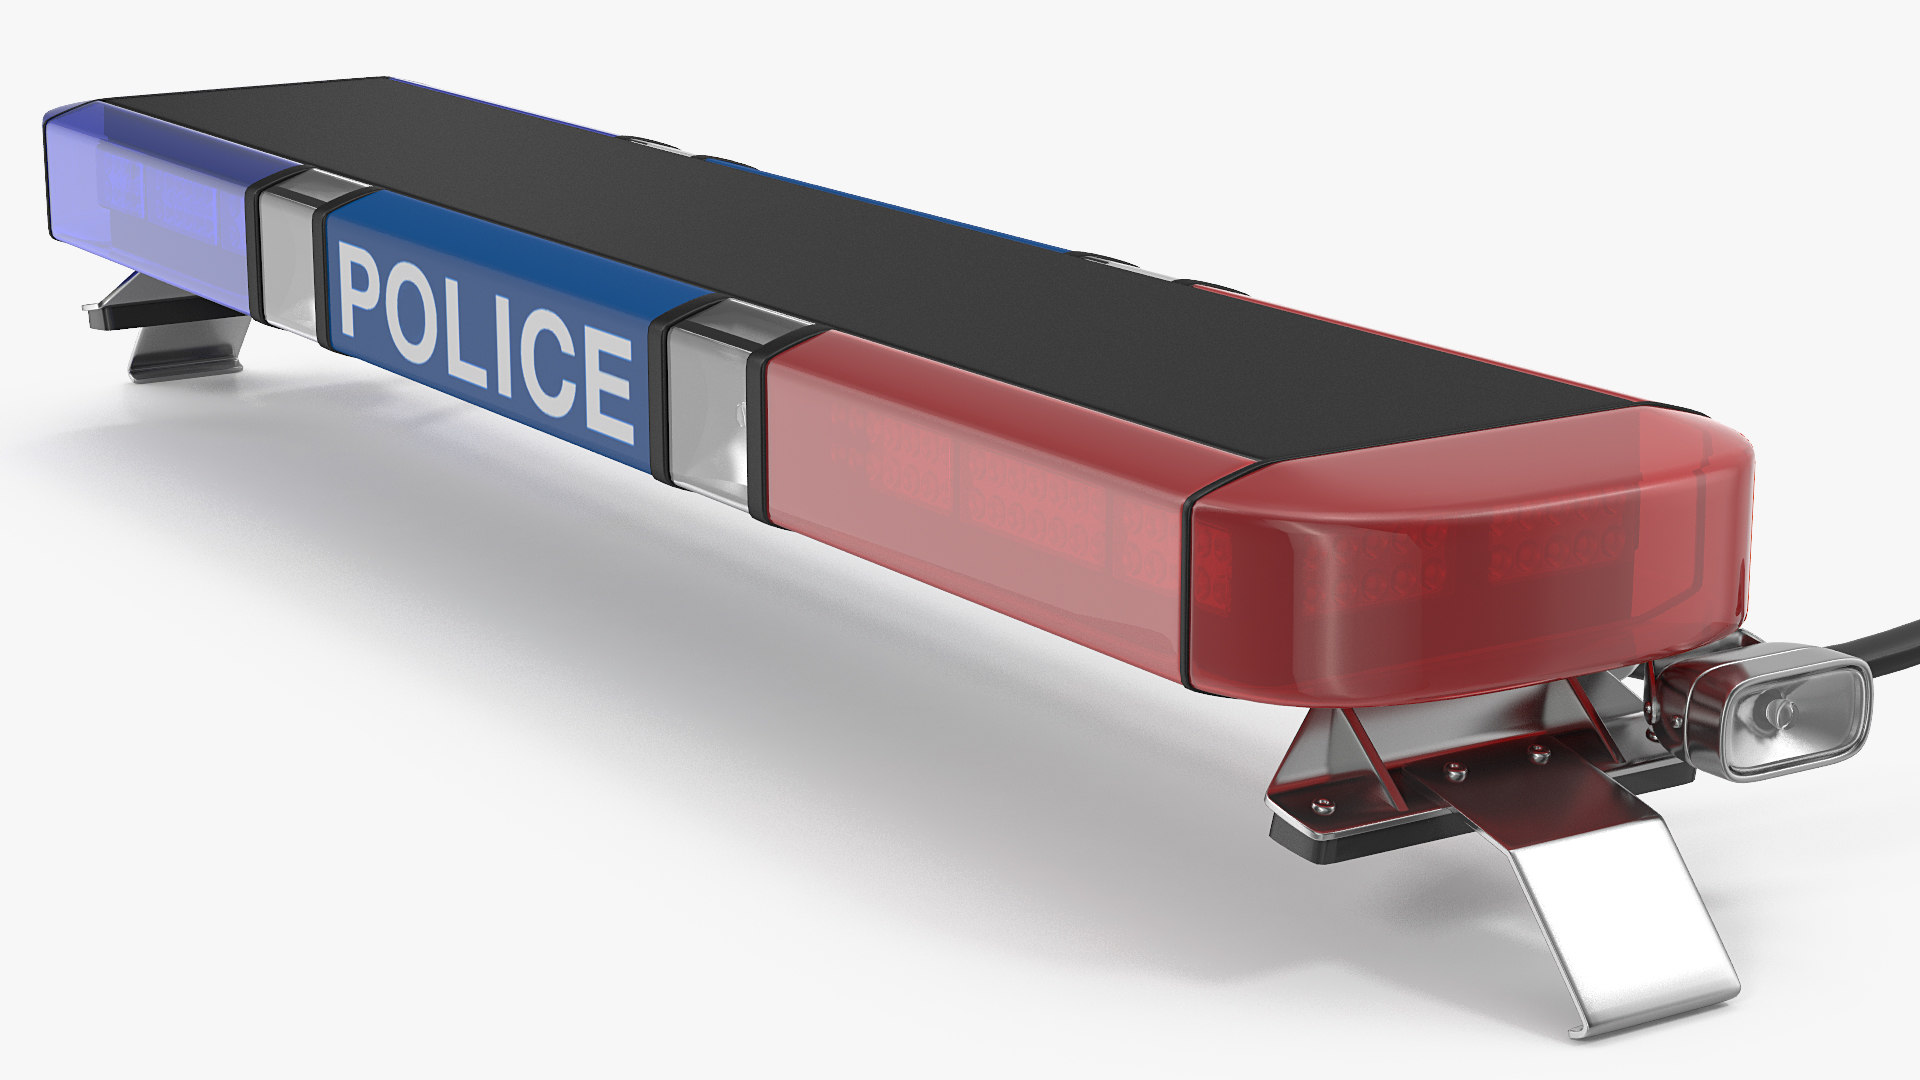 Police vehicle light bar 3D model - TurboSquid 1642365